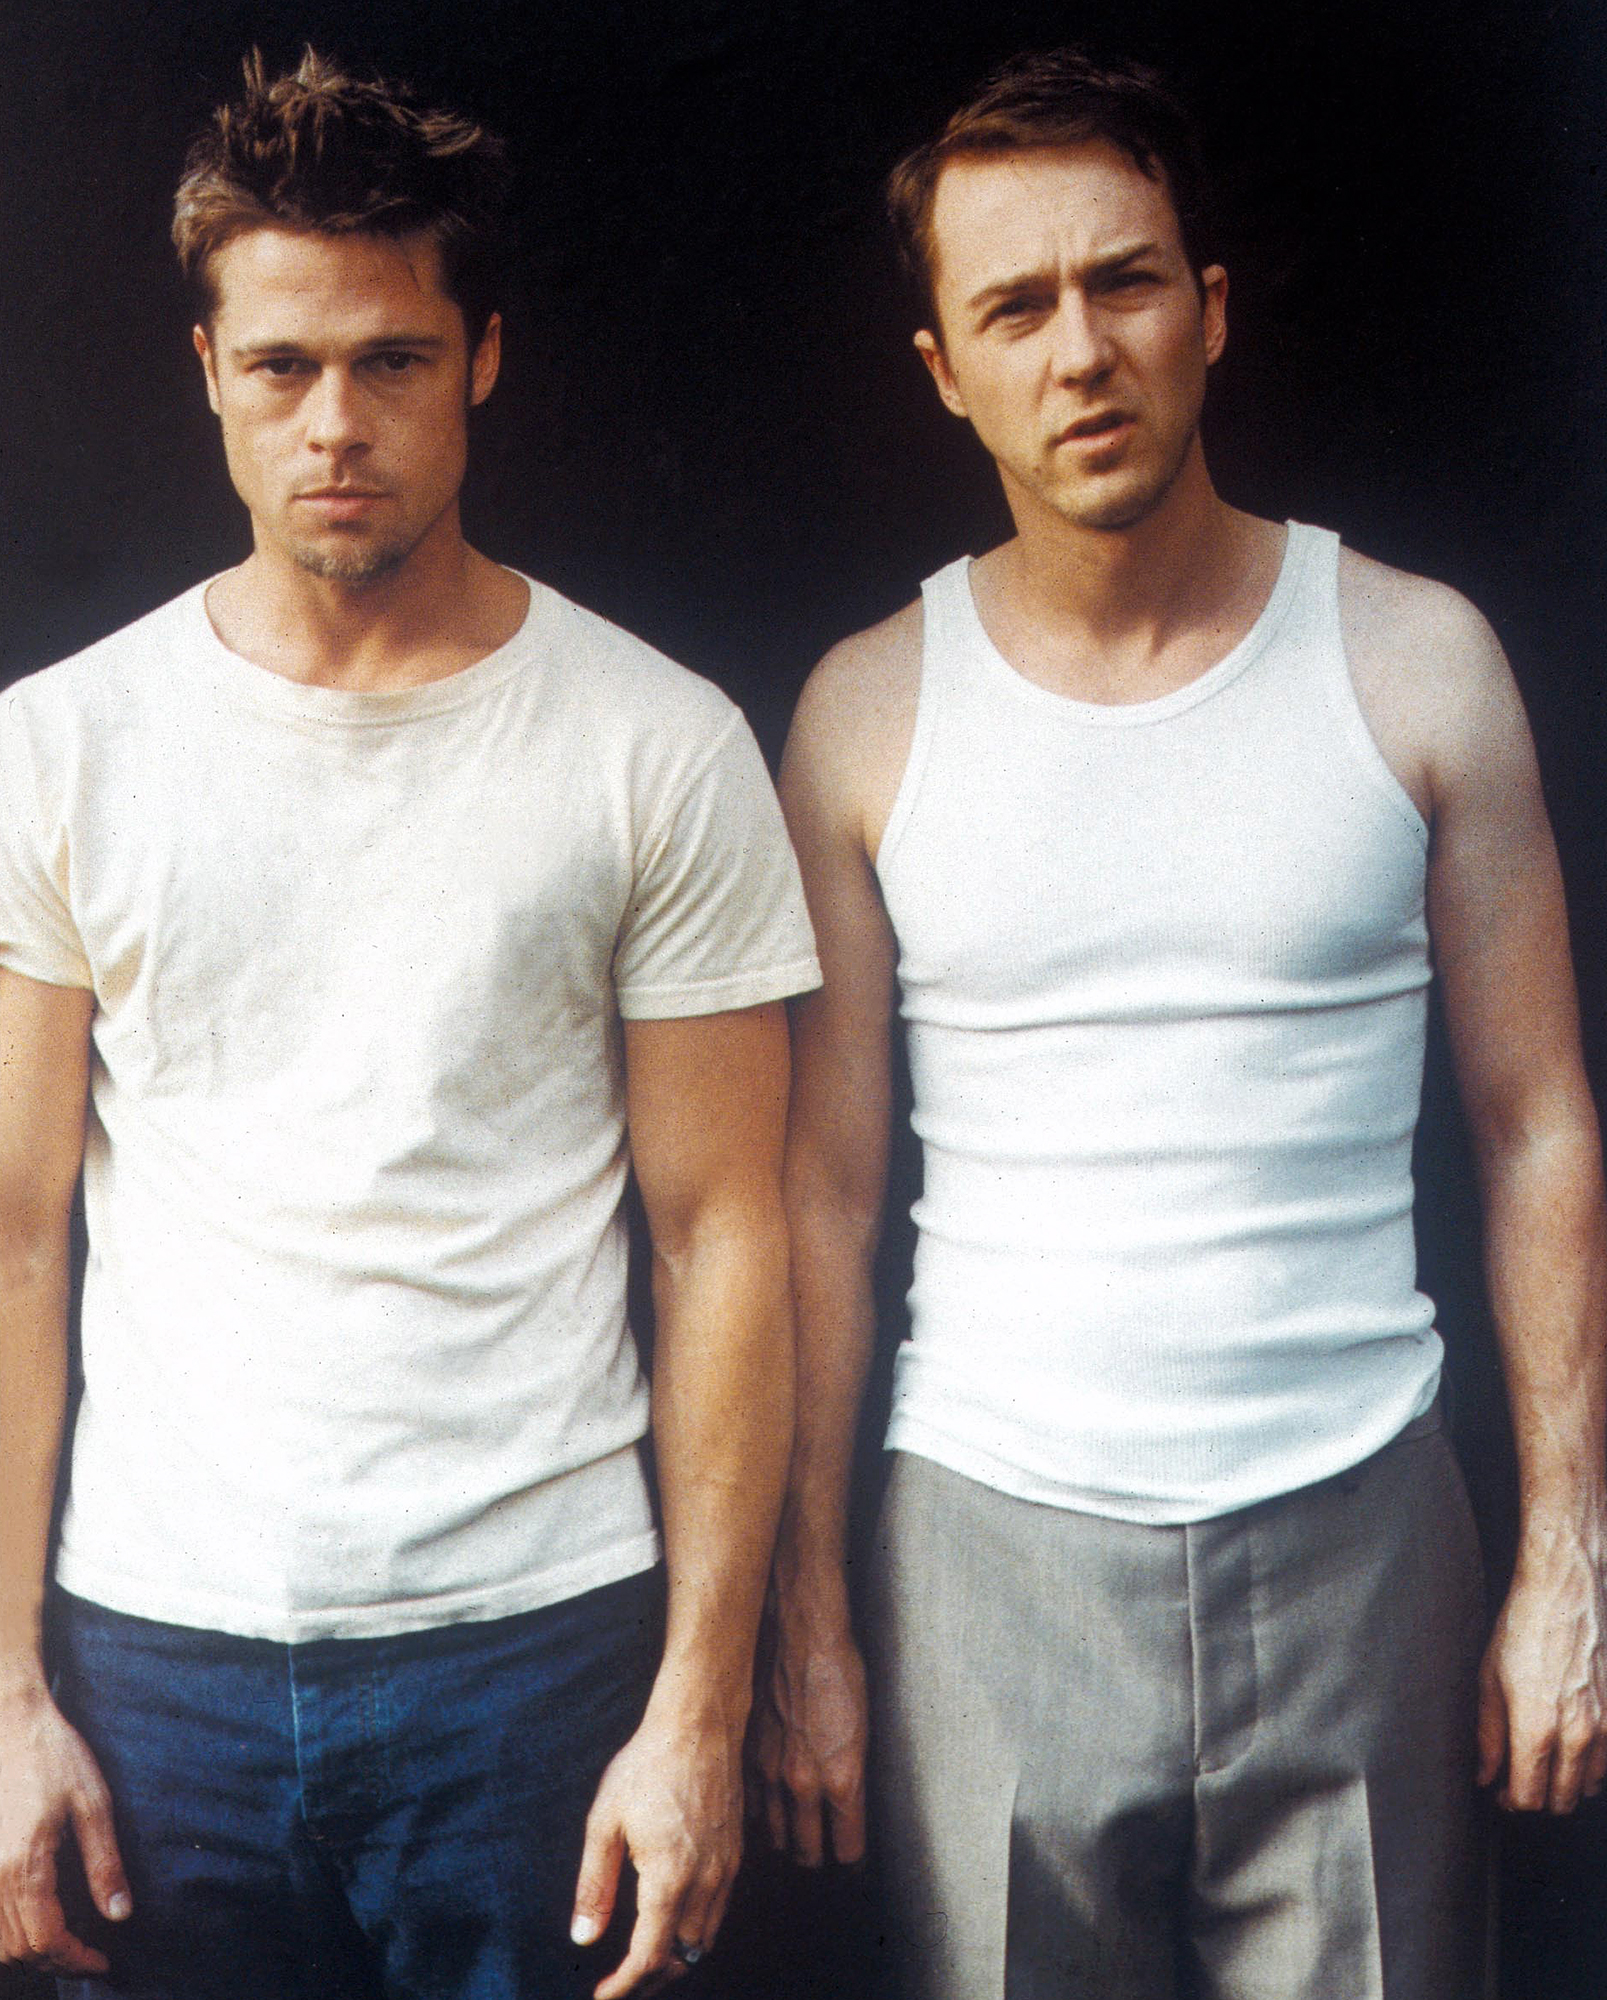 Edward Norton Talks Filming 'Fight Club' With Brad Pitt 20 Years